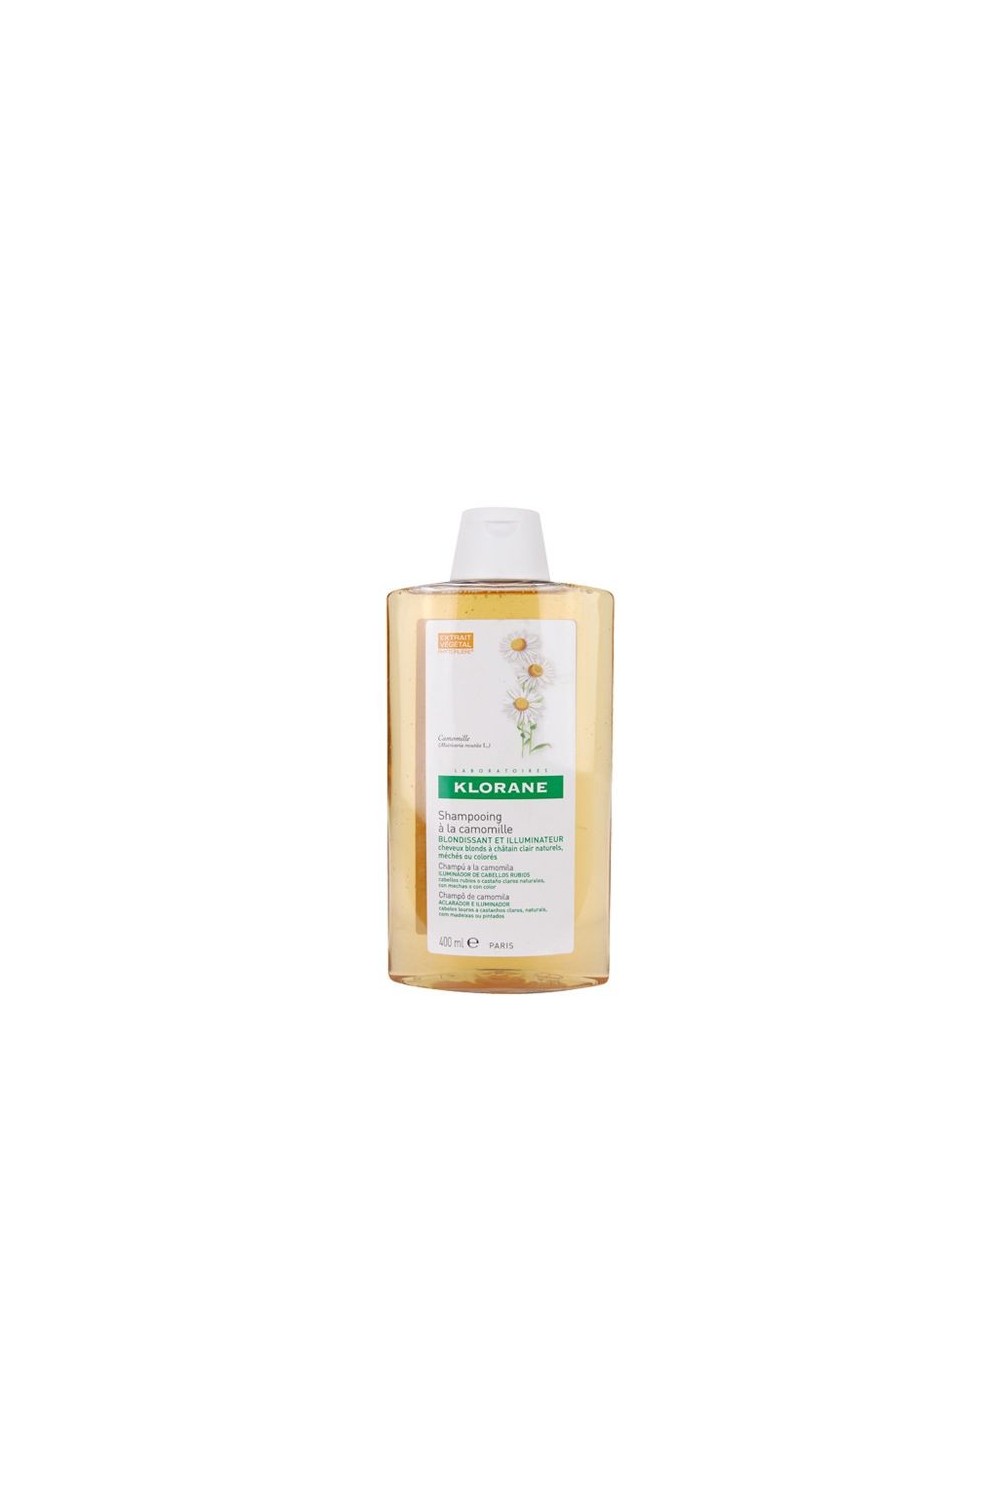 Klorane Brightening Shampoo With Camomile 400ml